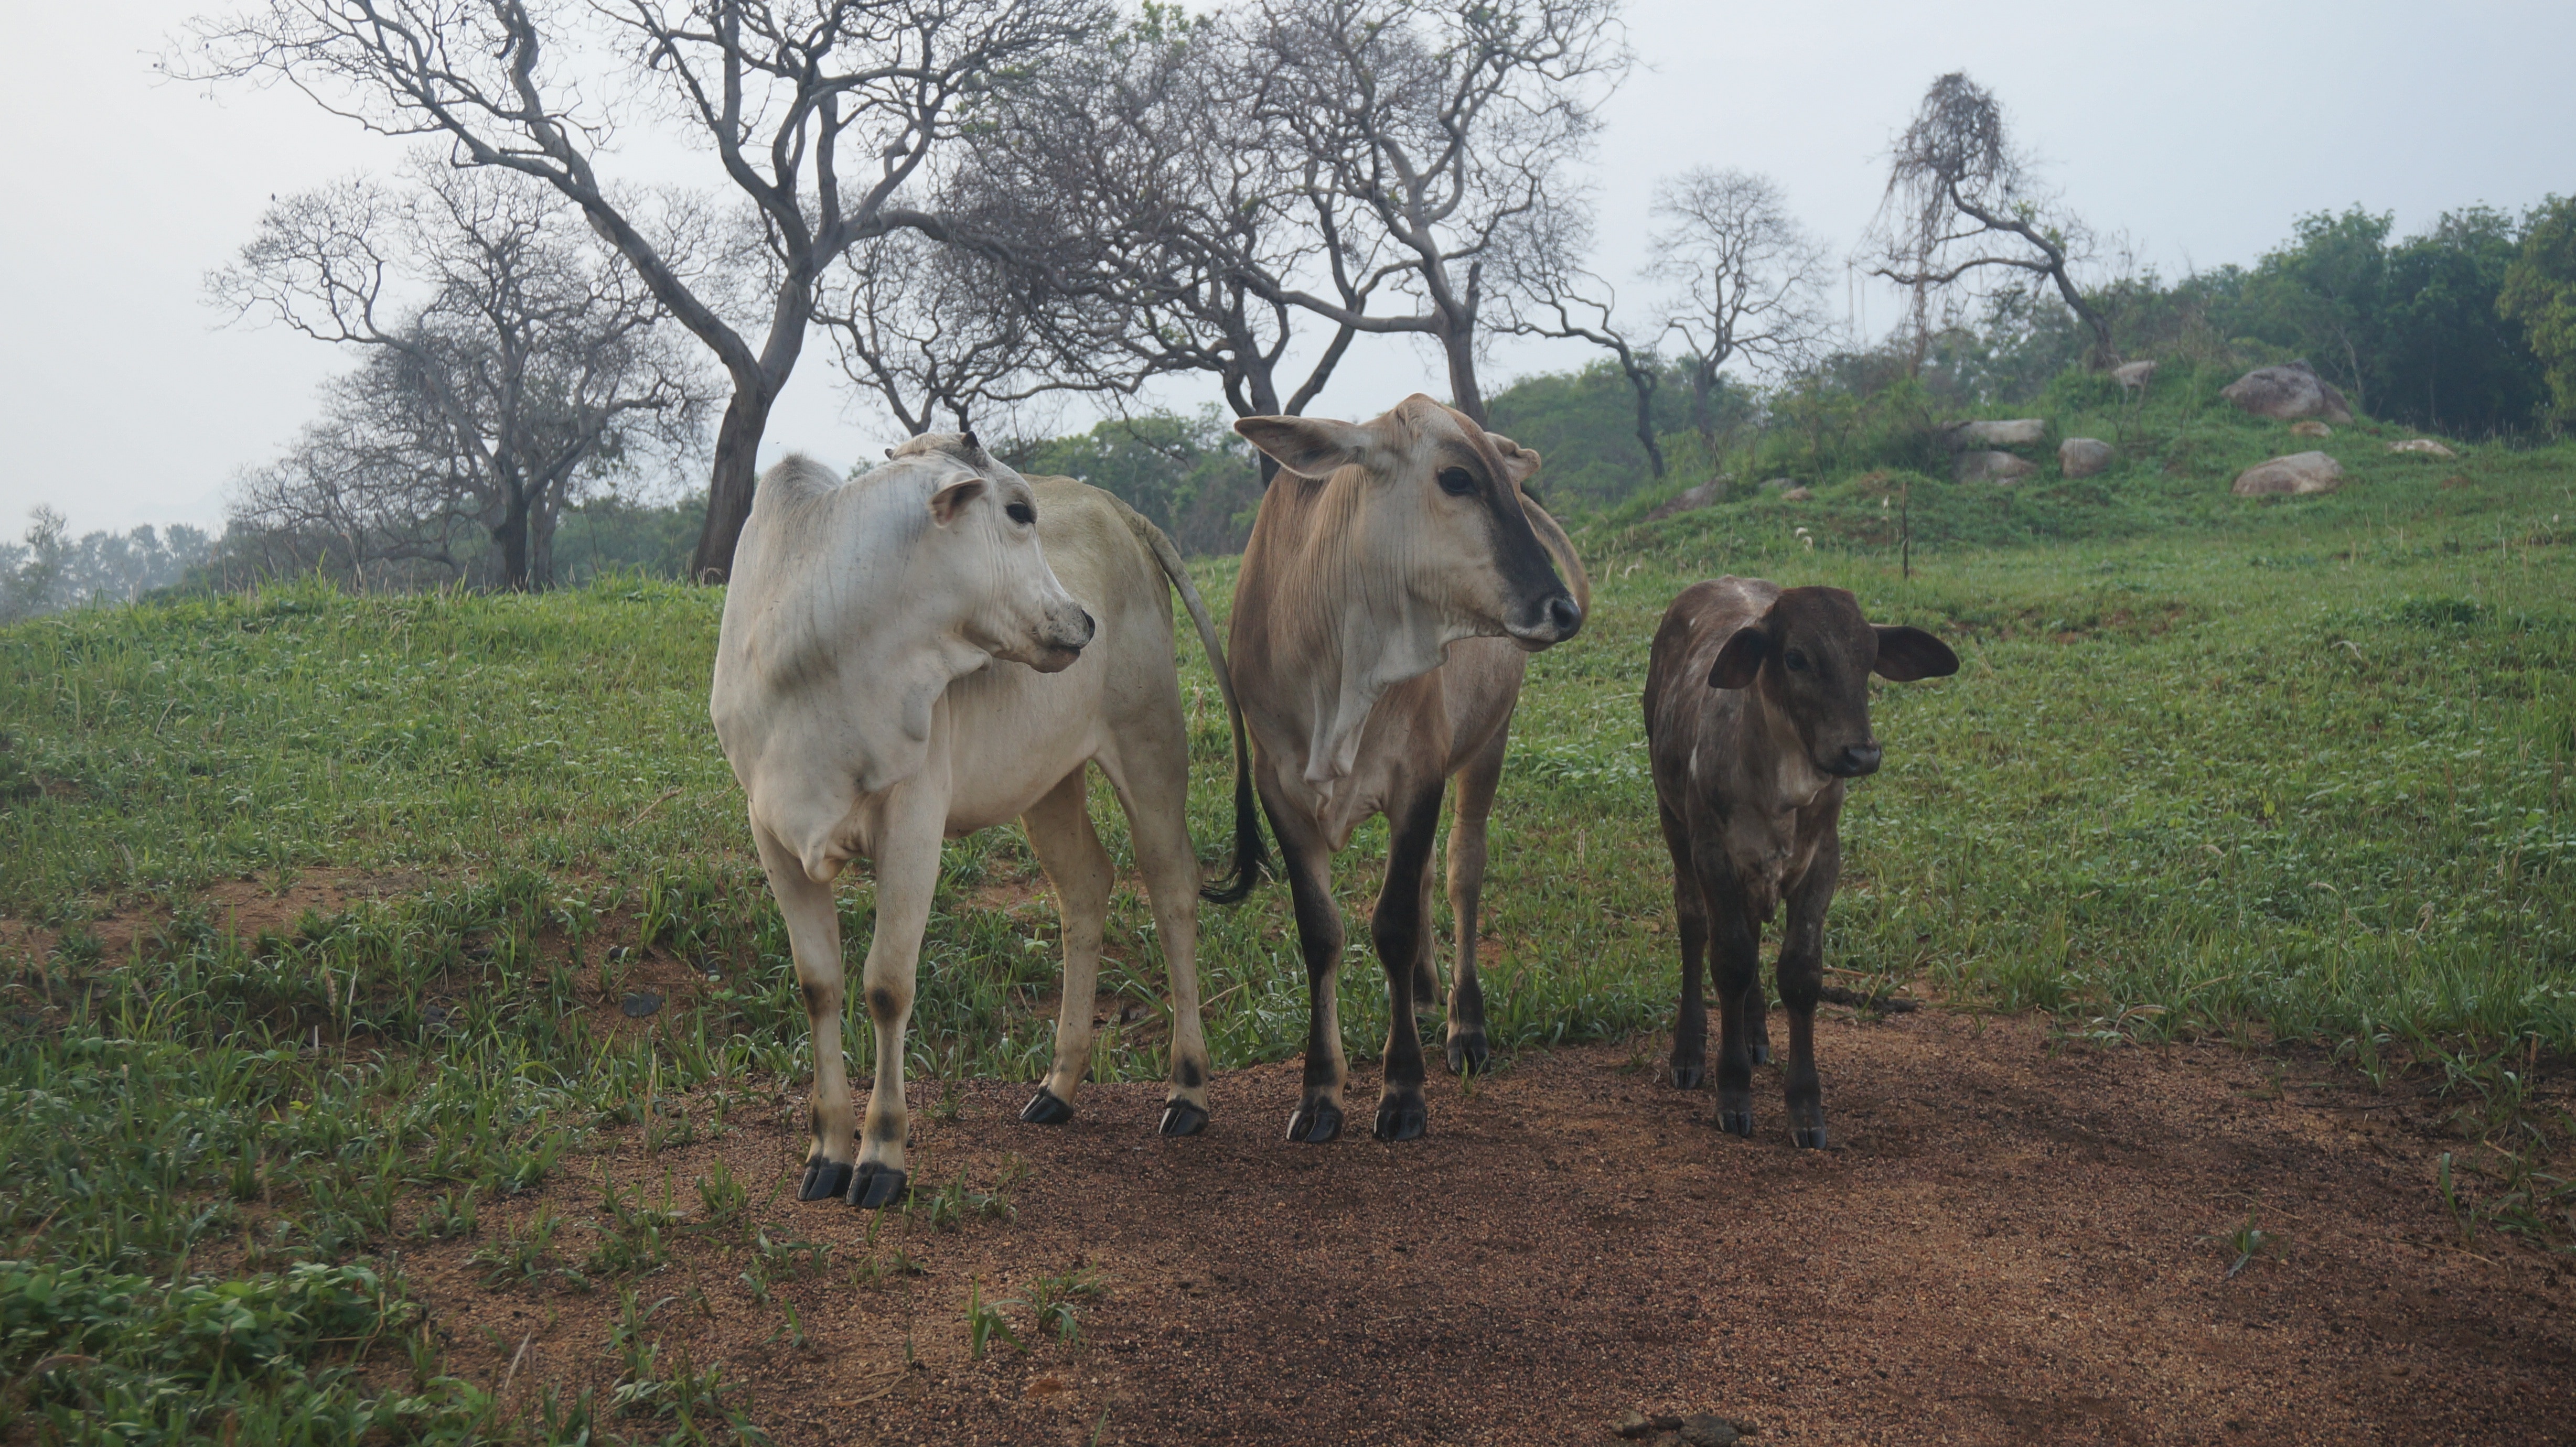 three cow cuff on grass field during daytime photo